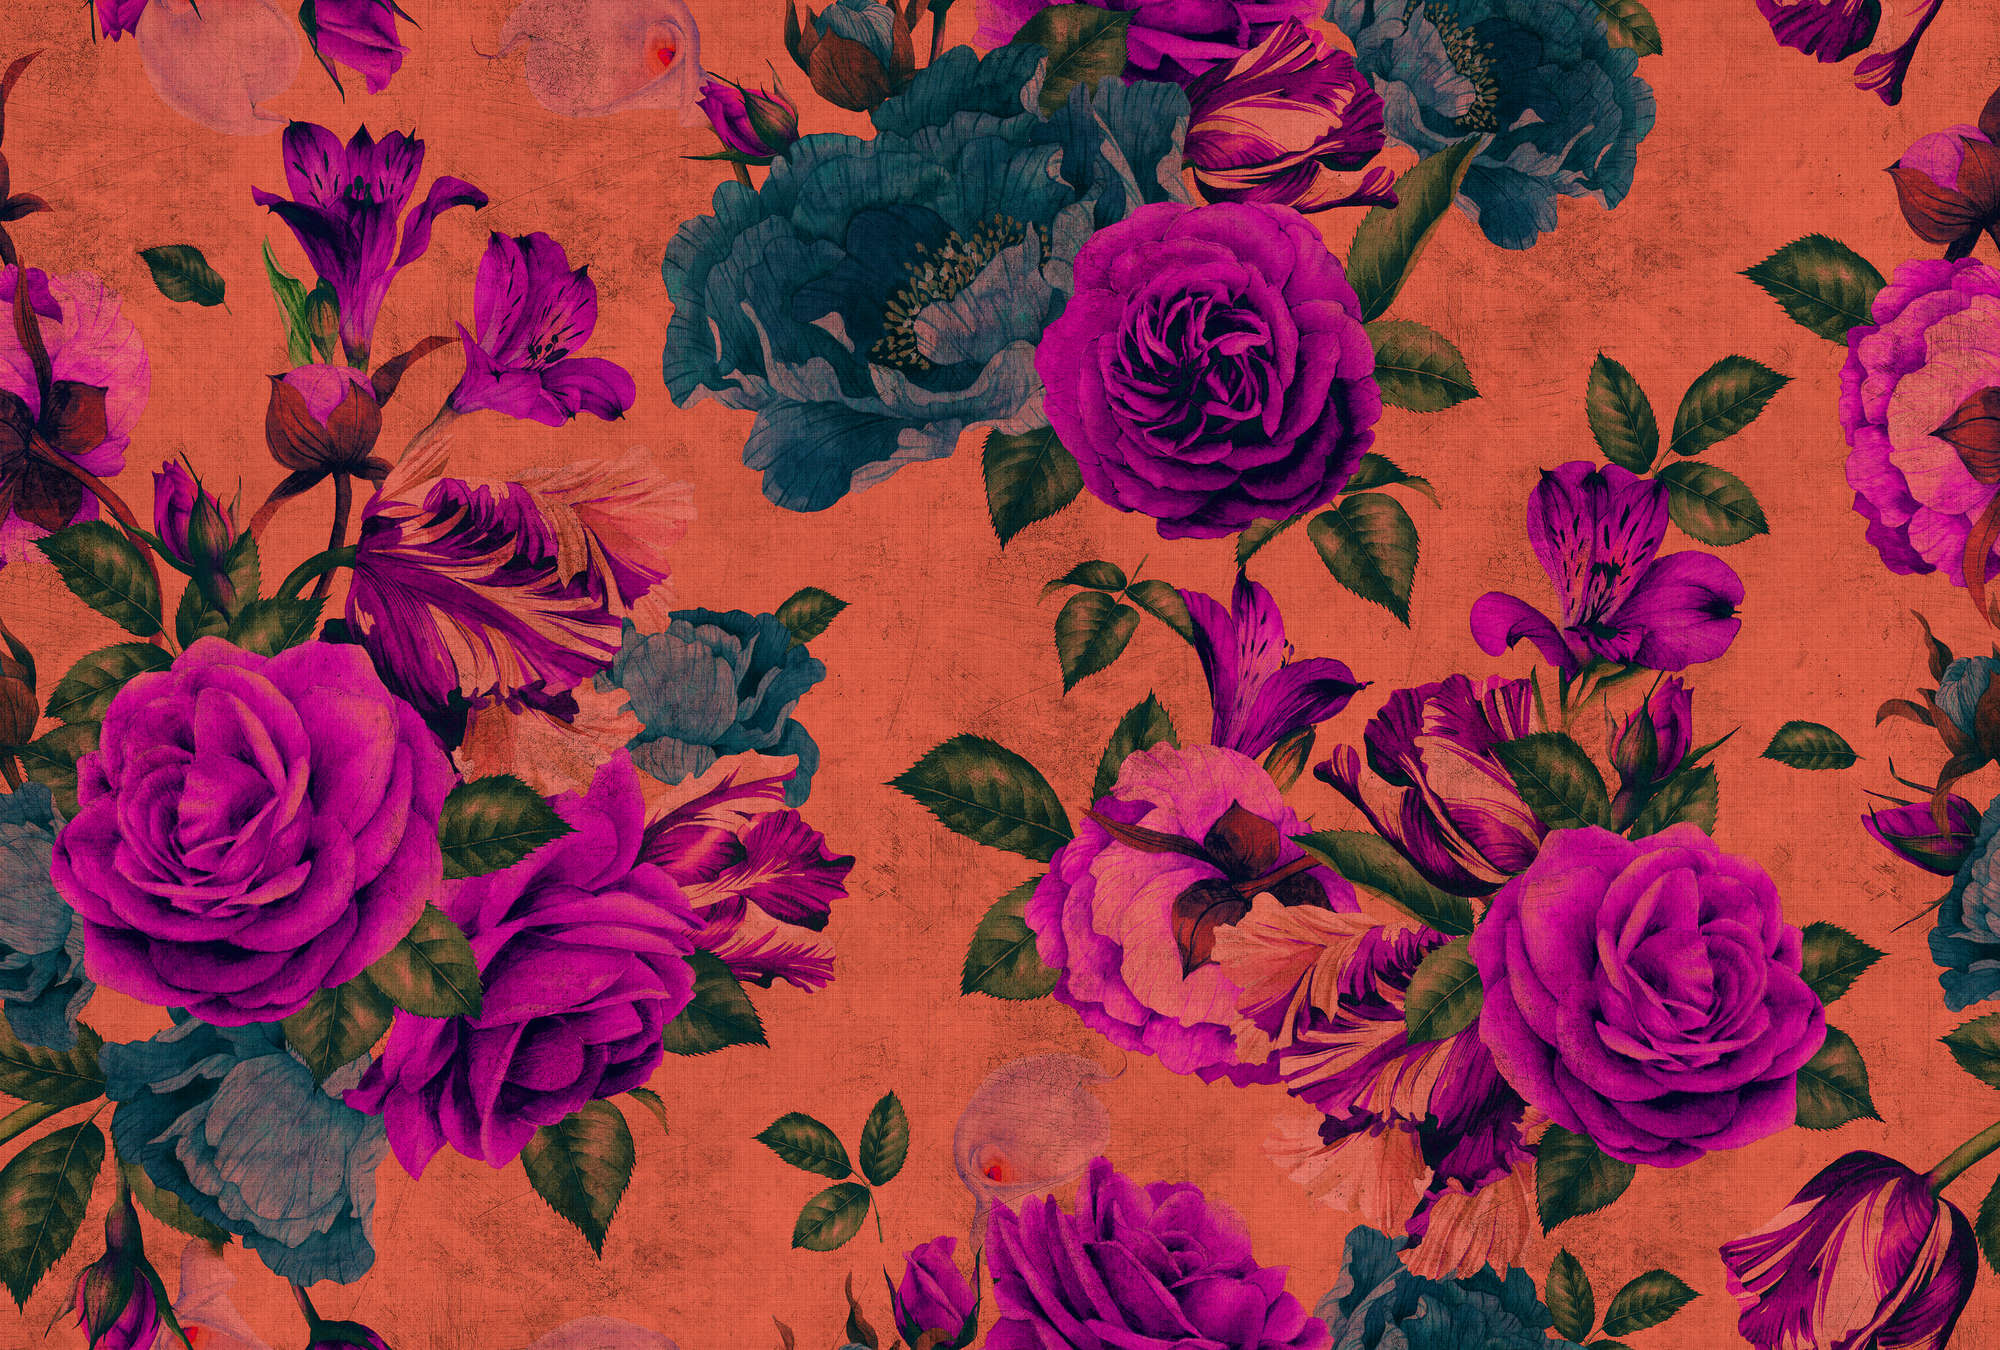             Spanish rose 2 - Papel pintado pétalos de rosa, estructura natural con colores vivos - naranja, violeta | nácar liso
        